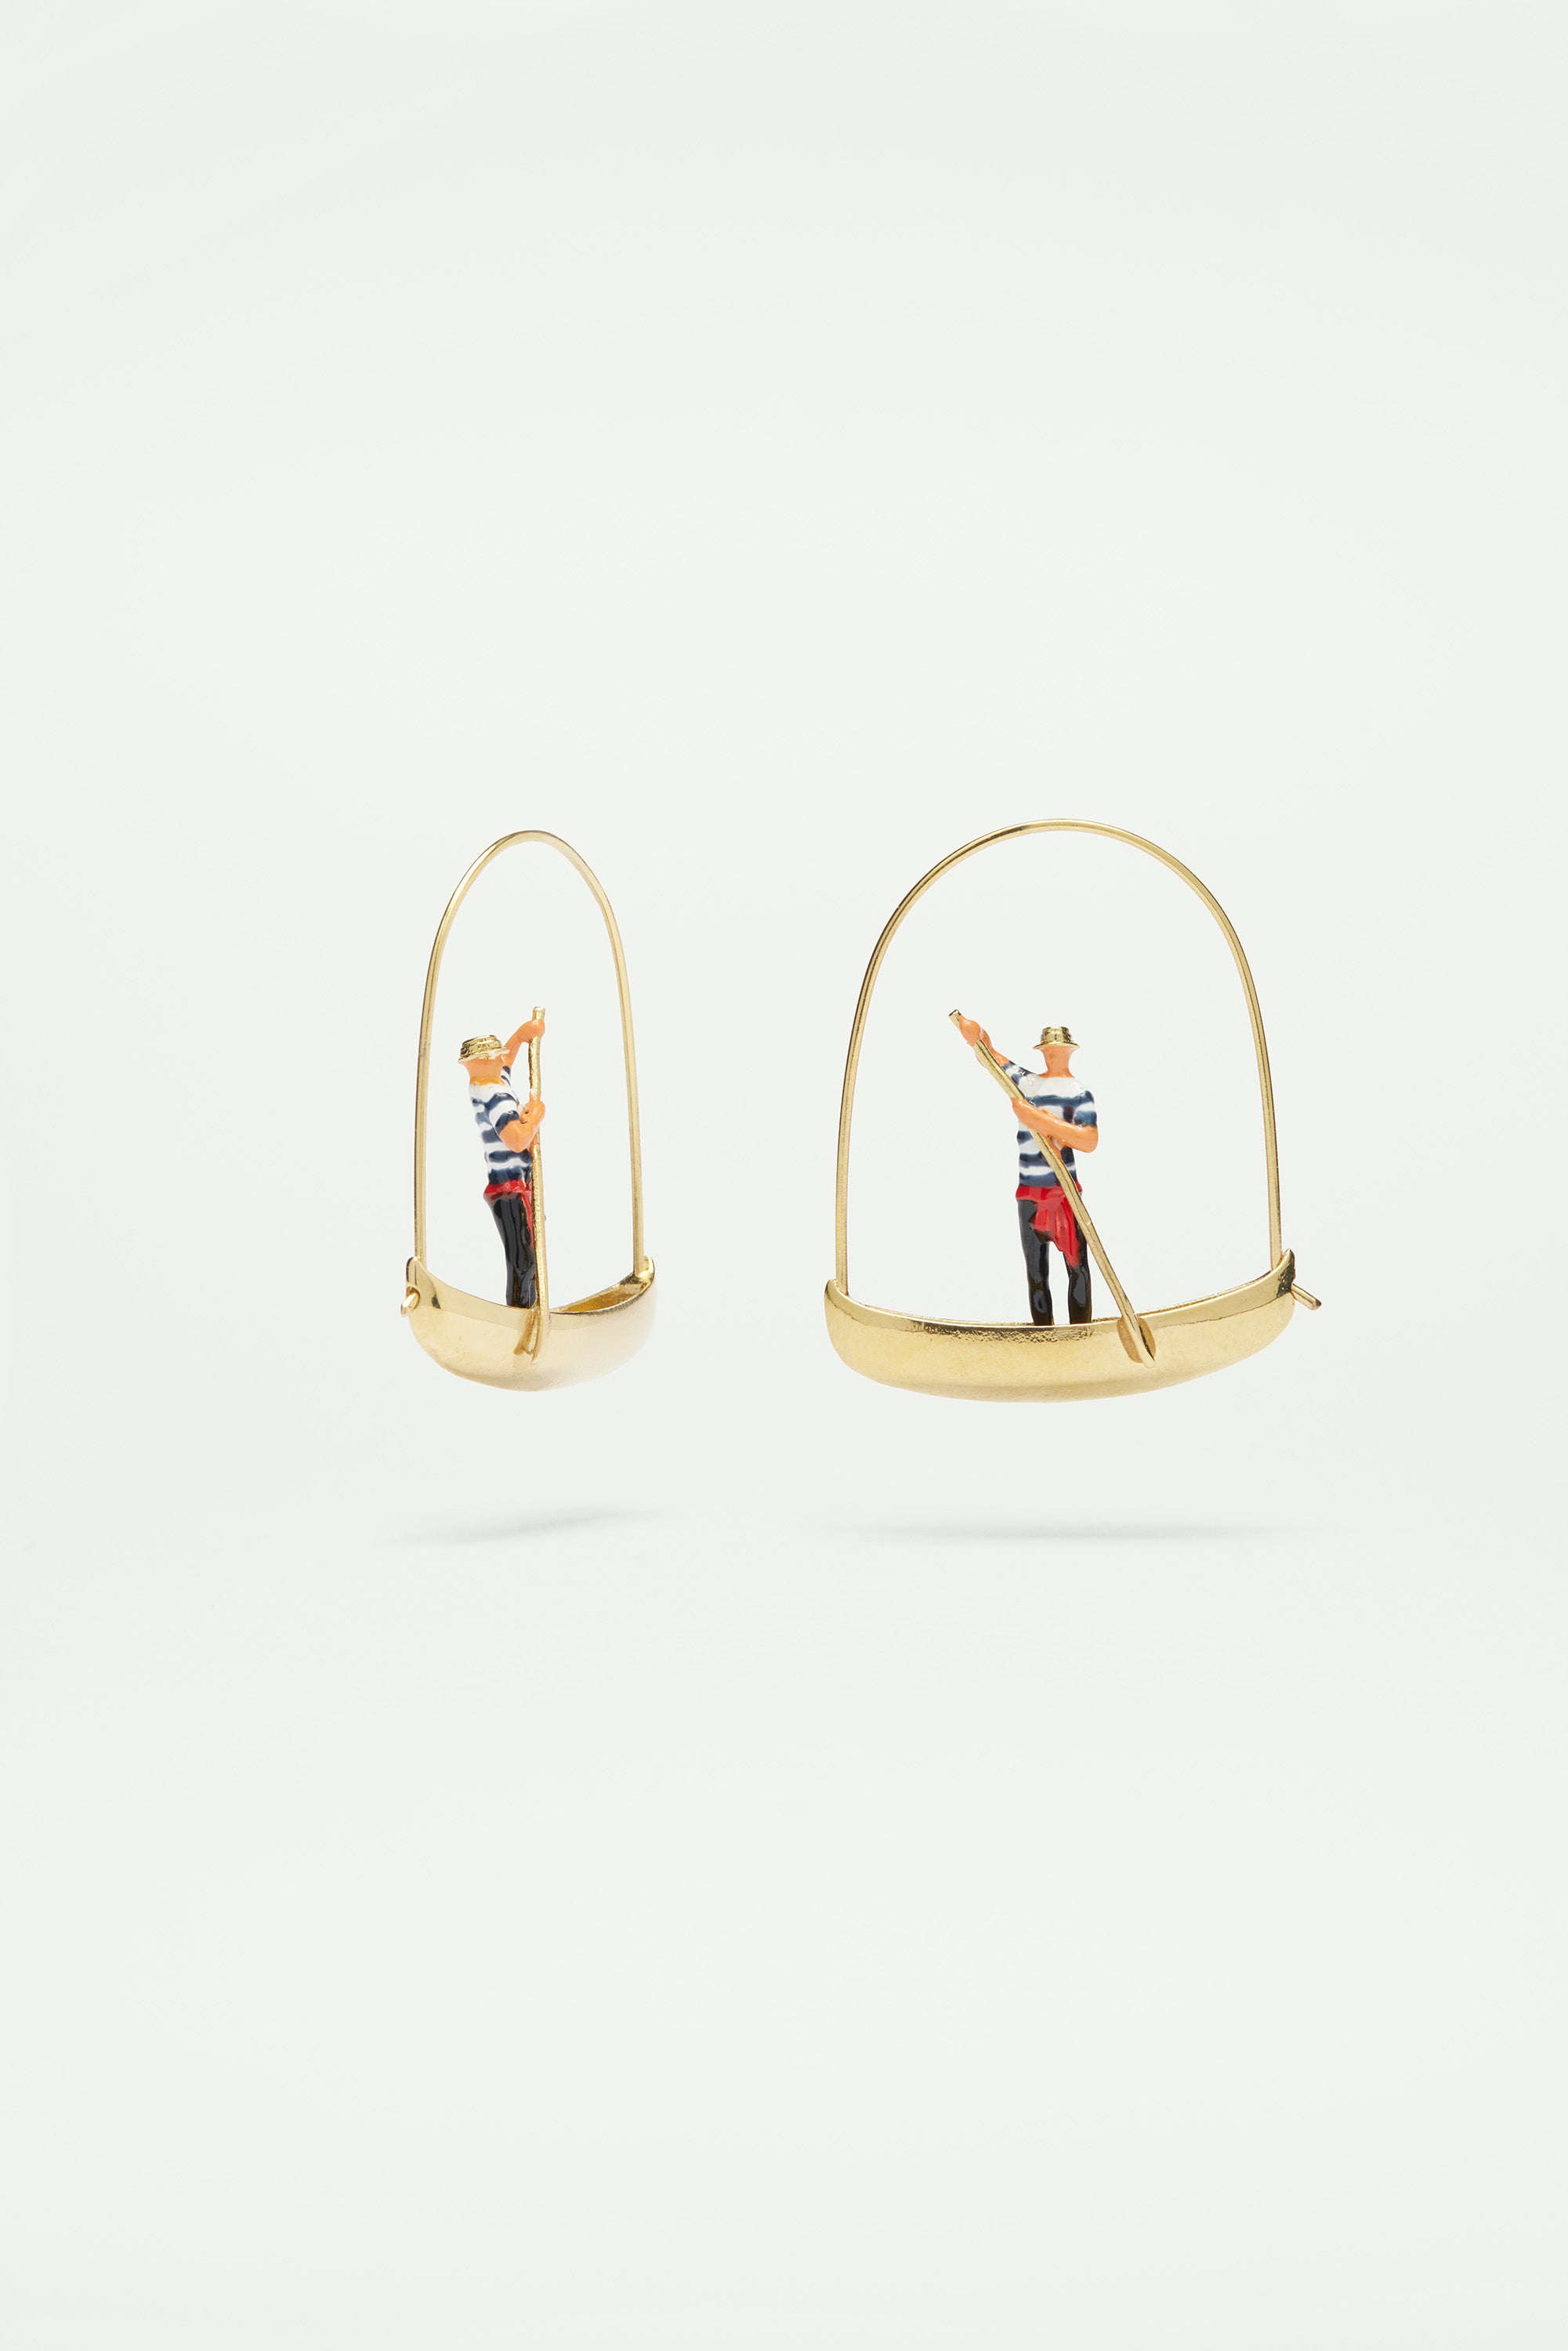 Boatman and gondola post earrings